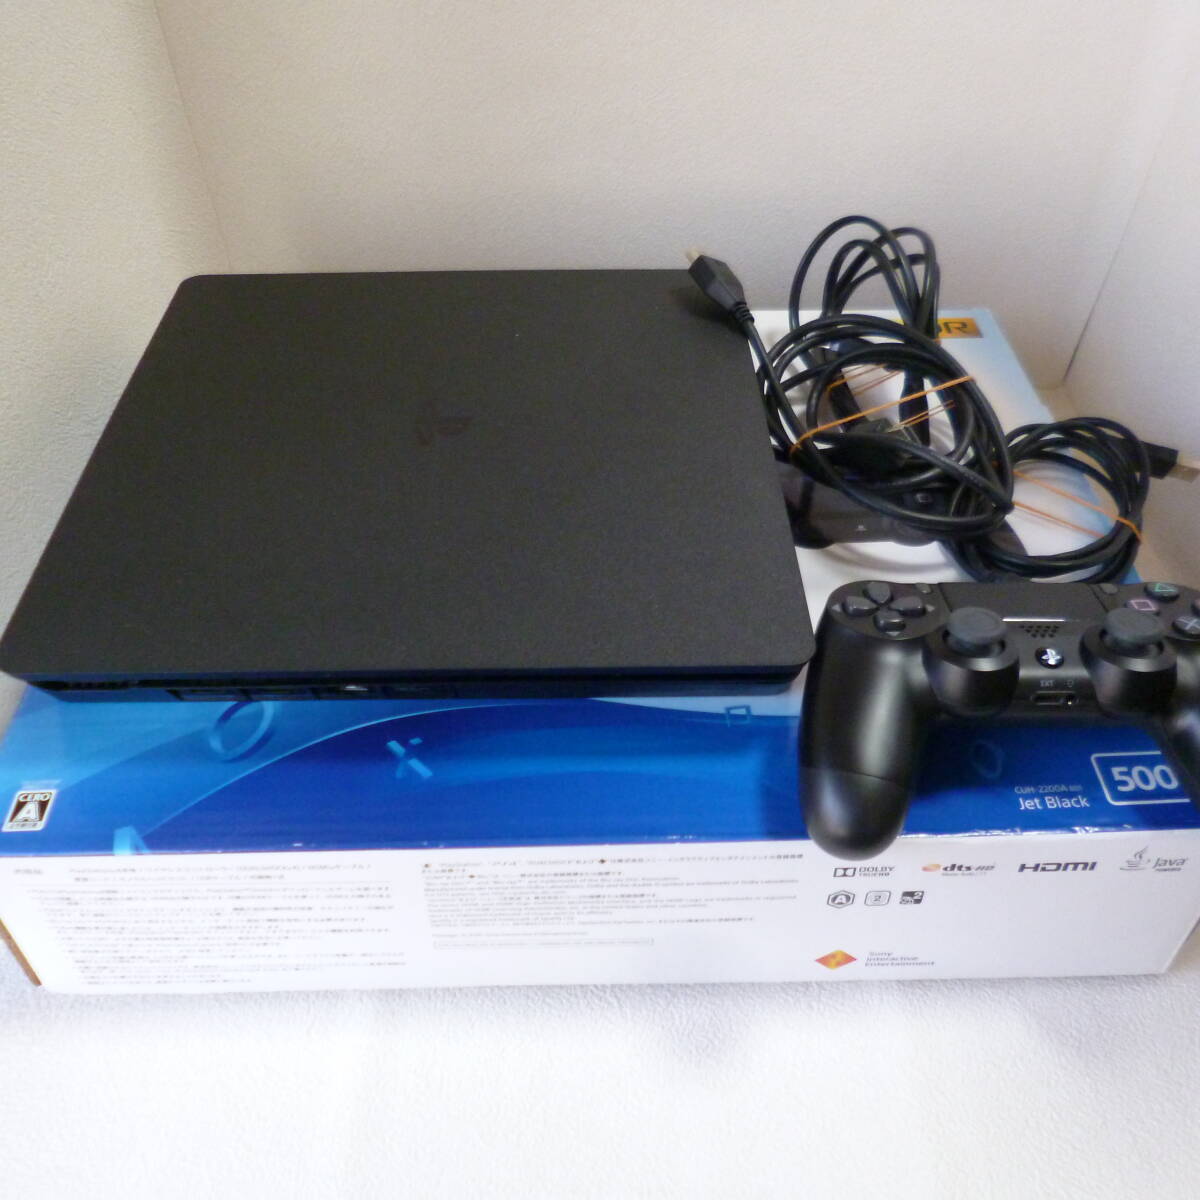 BBD0021 PlayStation4 Jet Black 500 ГБ CUH-2200AB01 PS4